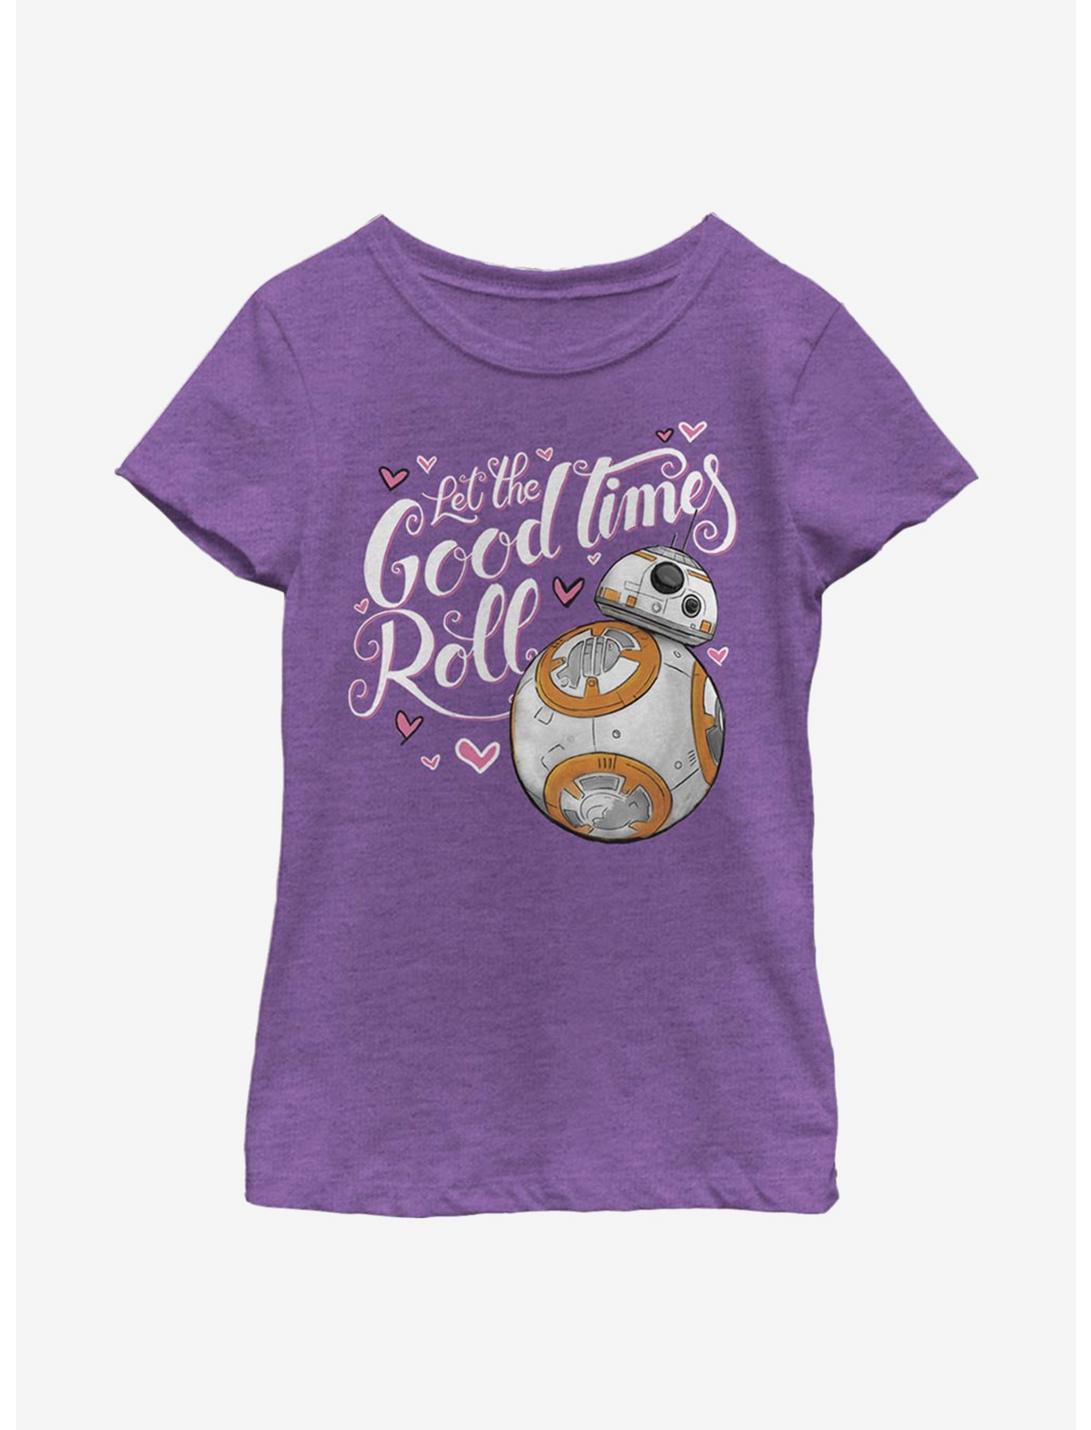 Star Wars Good Times Heart Youth Girls T-Shirt, PURPLE BERRY, hi-res